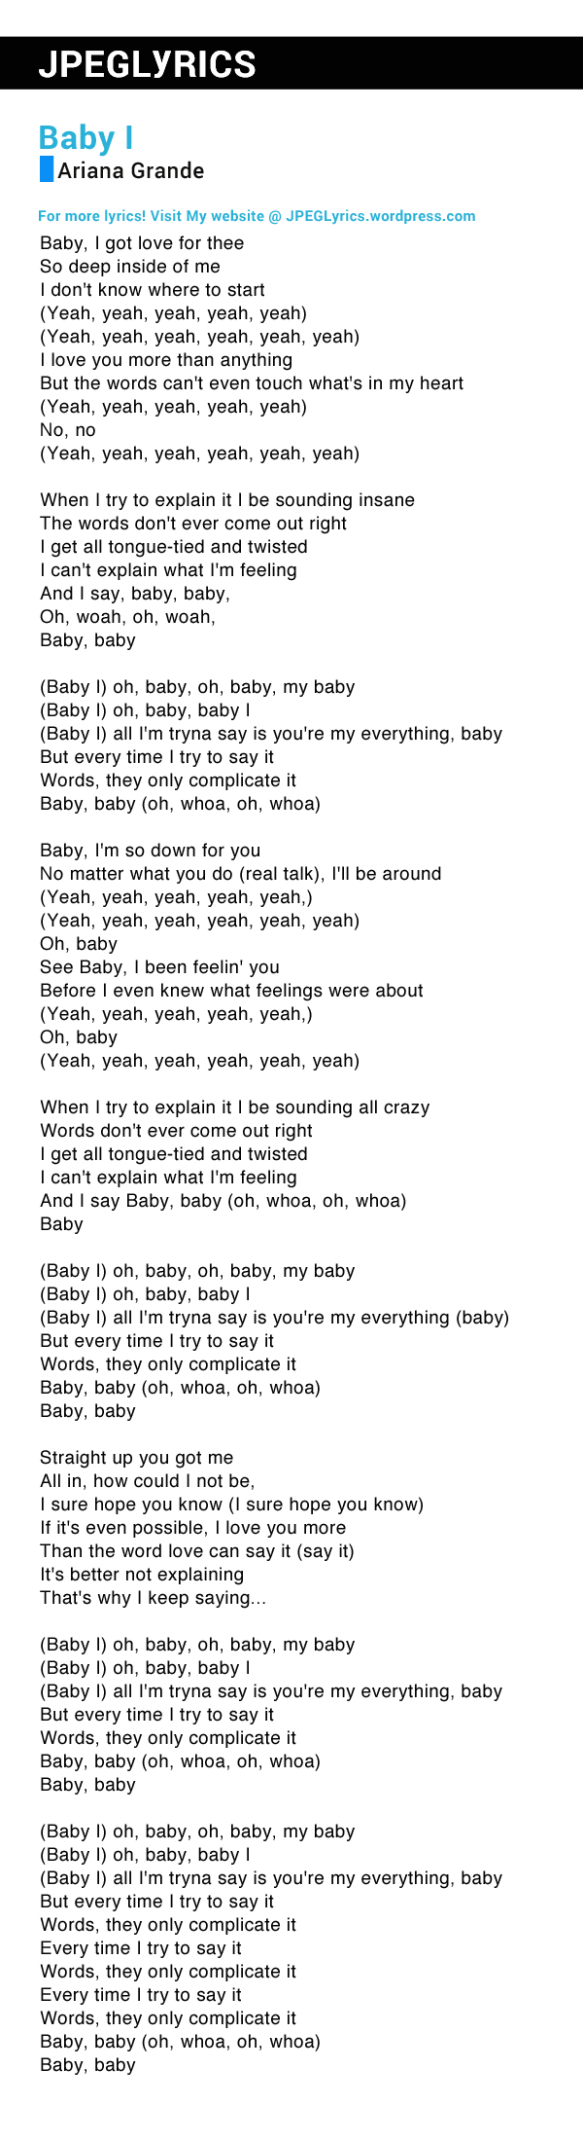 Baby I By Ariana Grande Lyrics Jpeg Lyrics